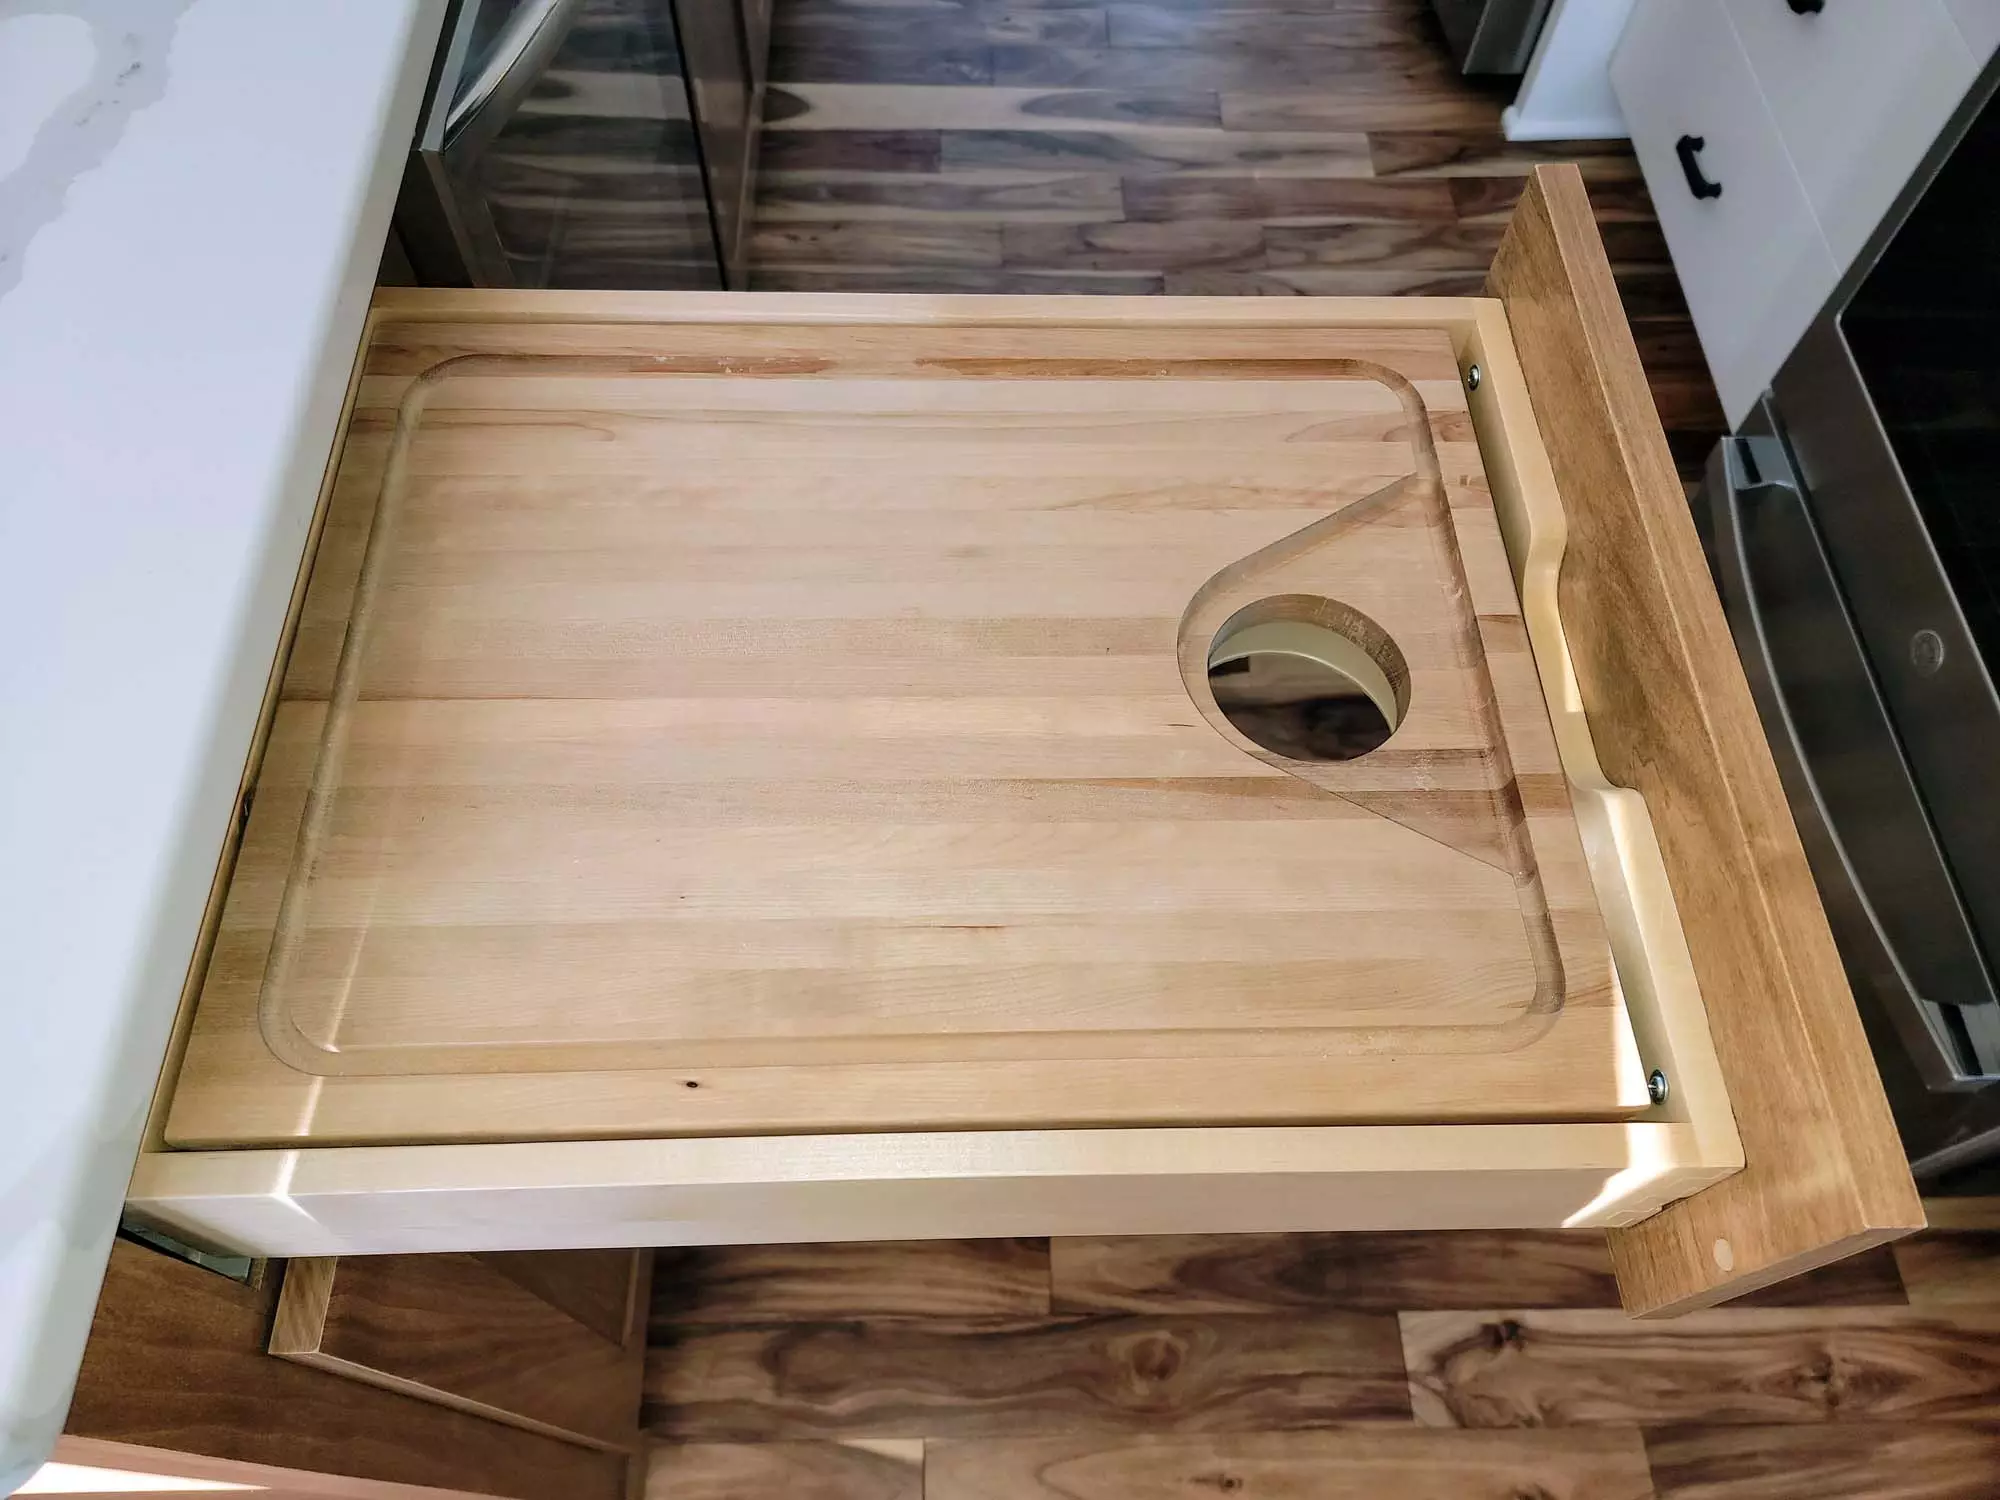 Custom Cutting board drawer with hole to trash below